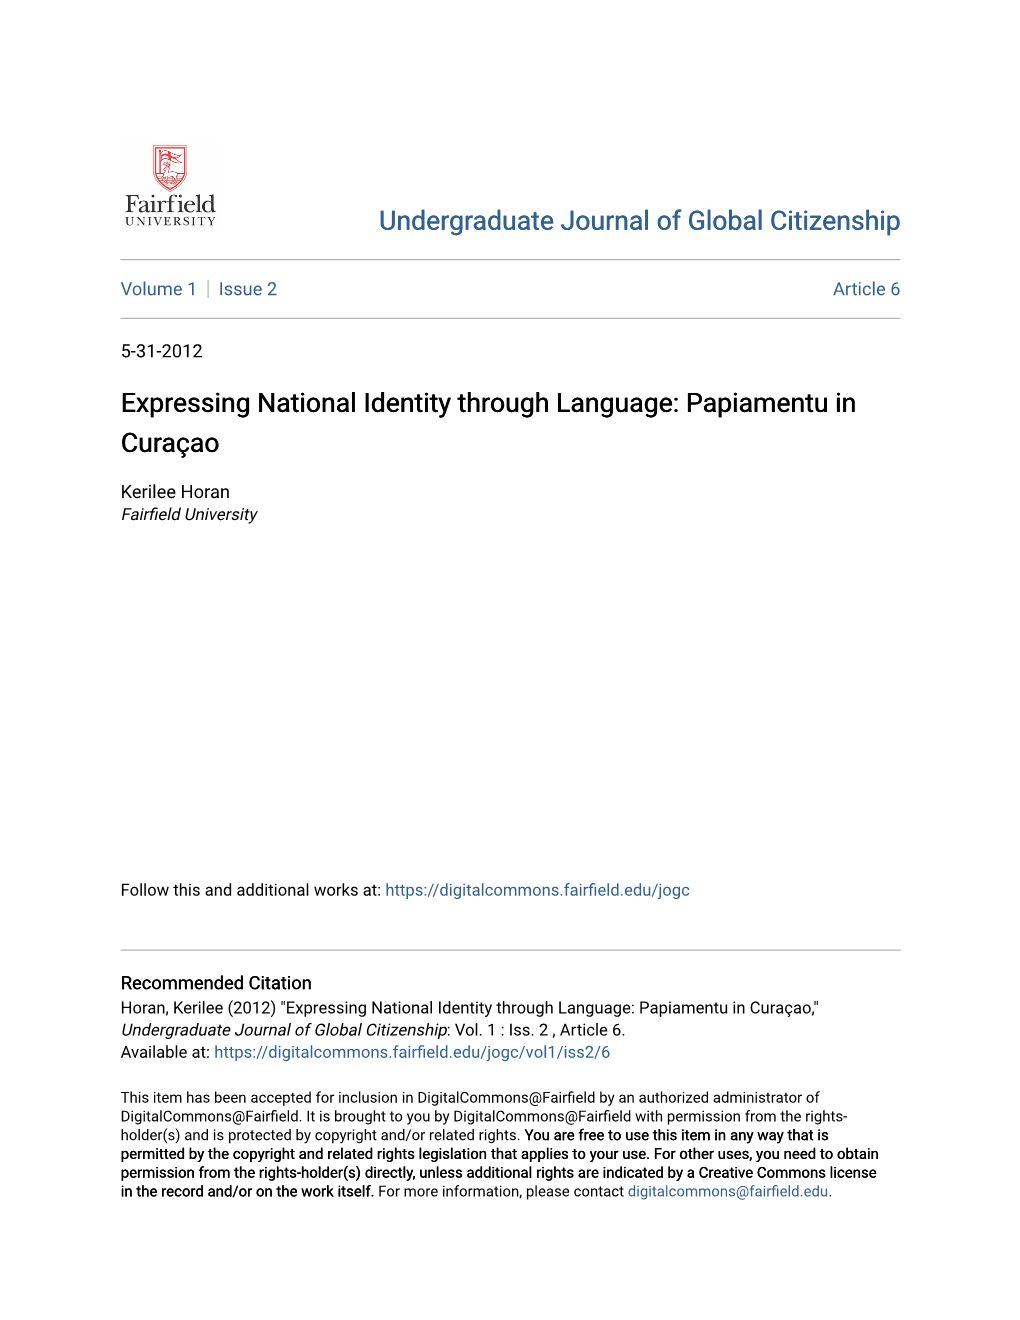 Expressing National Identity Through Language: Papiamentu in Curaã§Ao